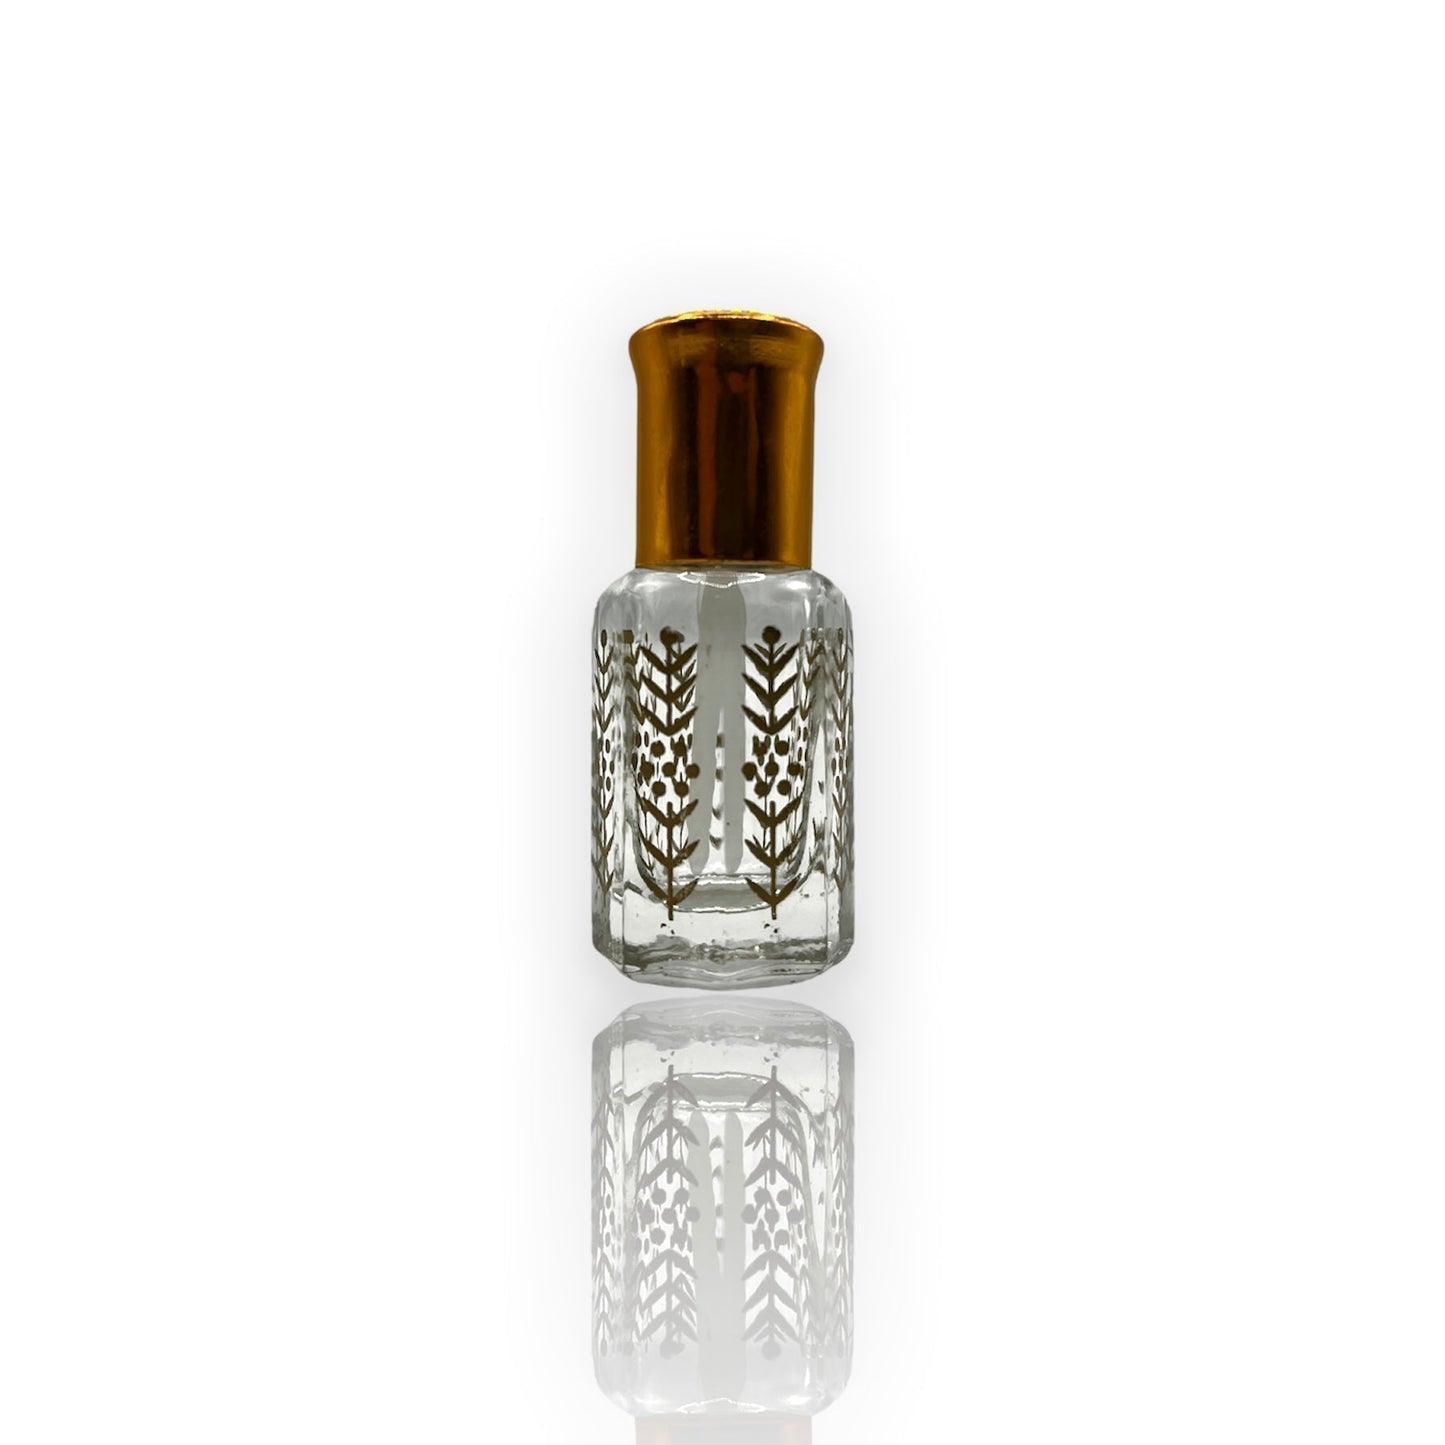 M-17 Oil Perfume *Inspired By Armani DArab